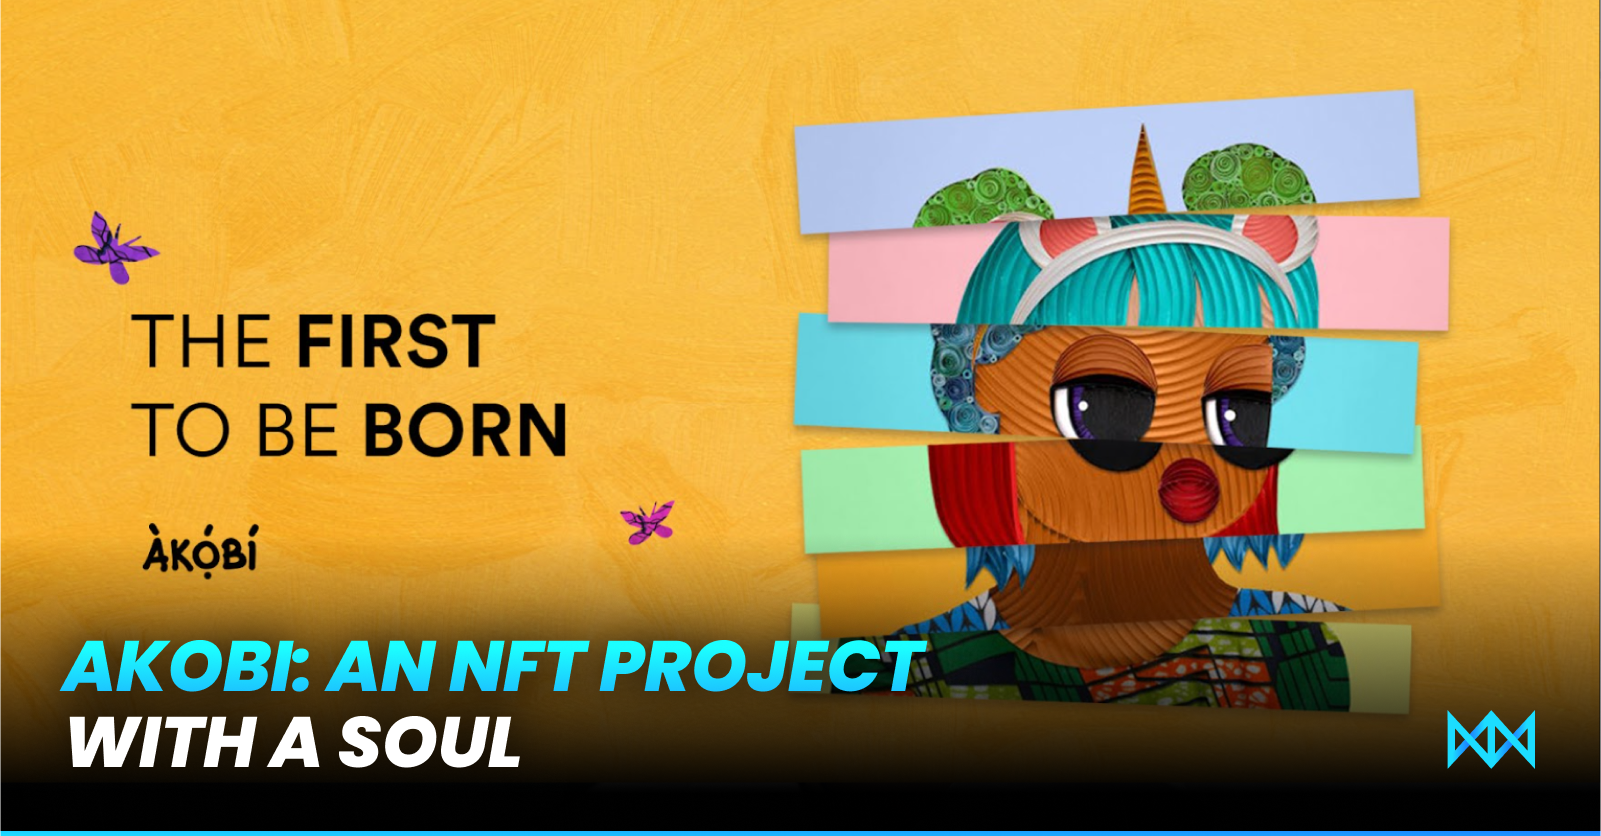 Akobi: An NFT Project With a Soul